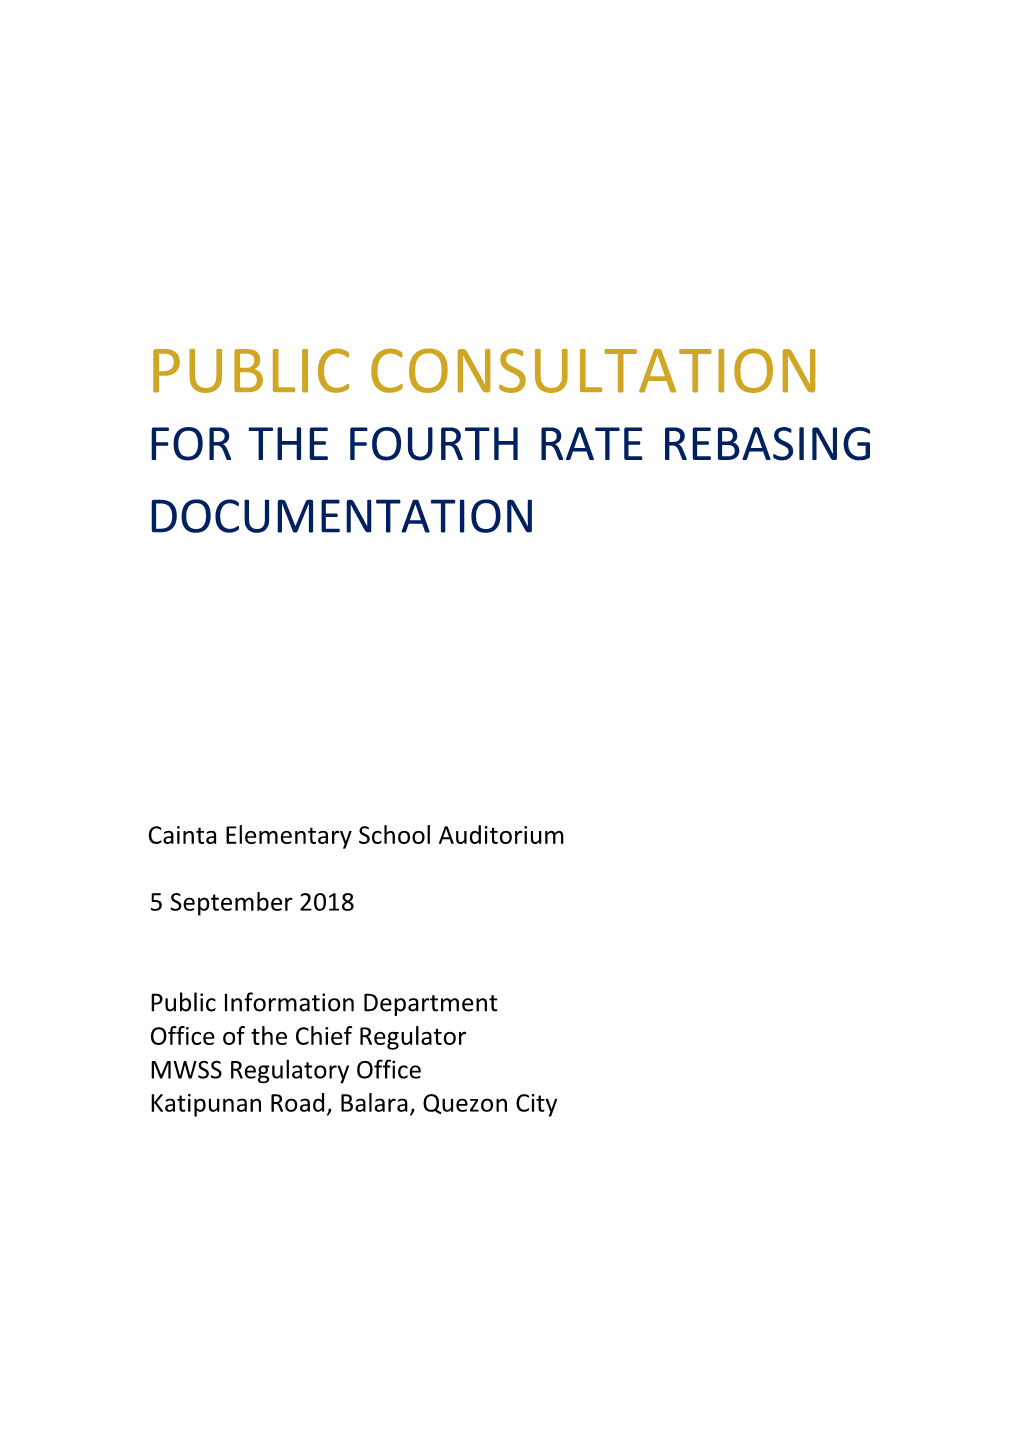 Documentation of Public Dialogue